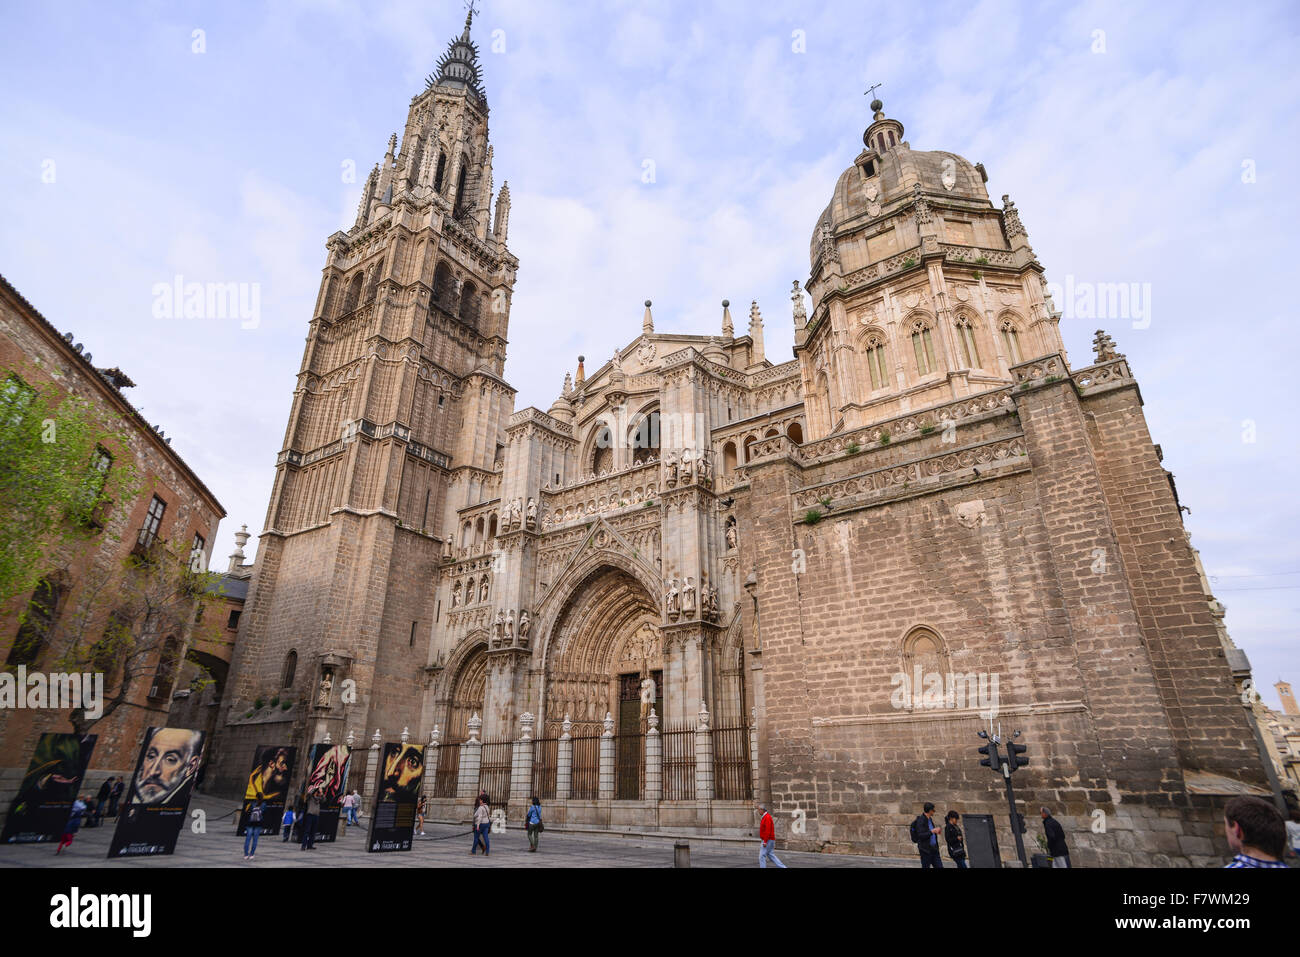 Primate Catedral de Santa Maria, Toledo, Spain Stock Photo